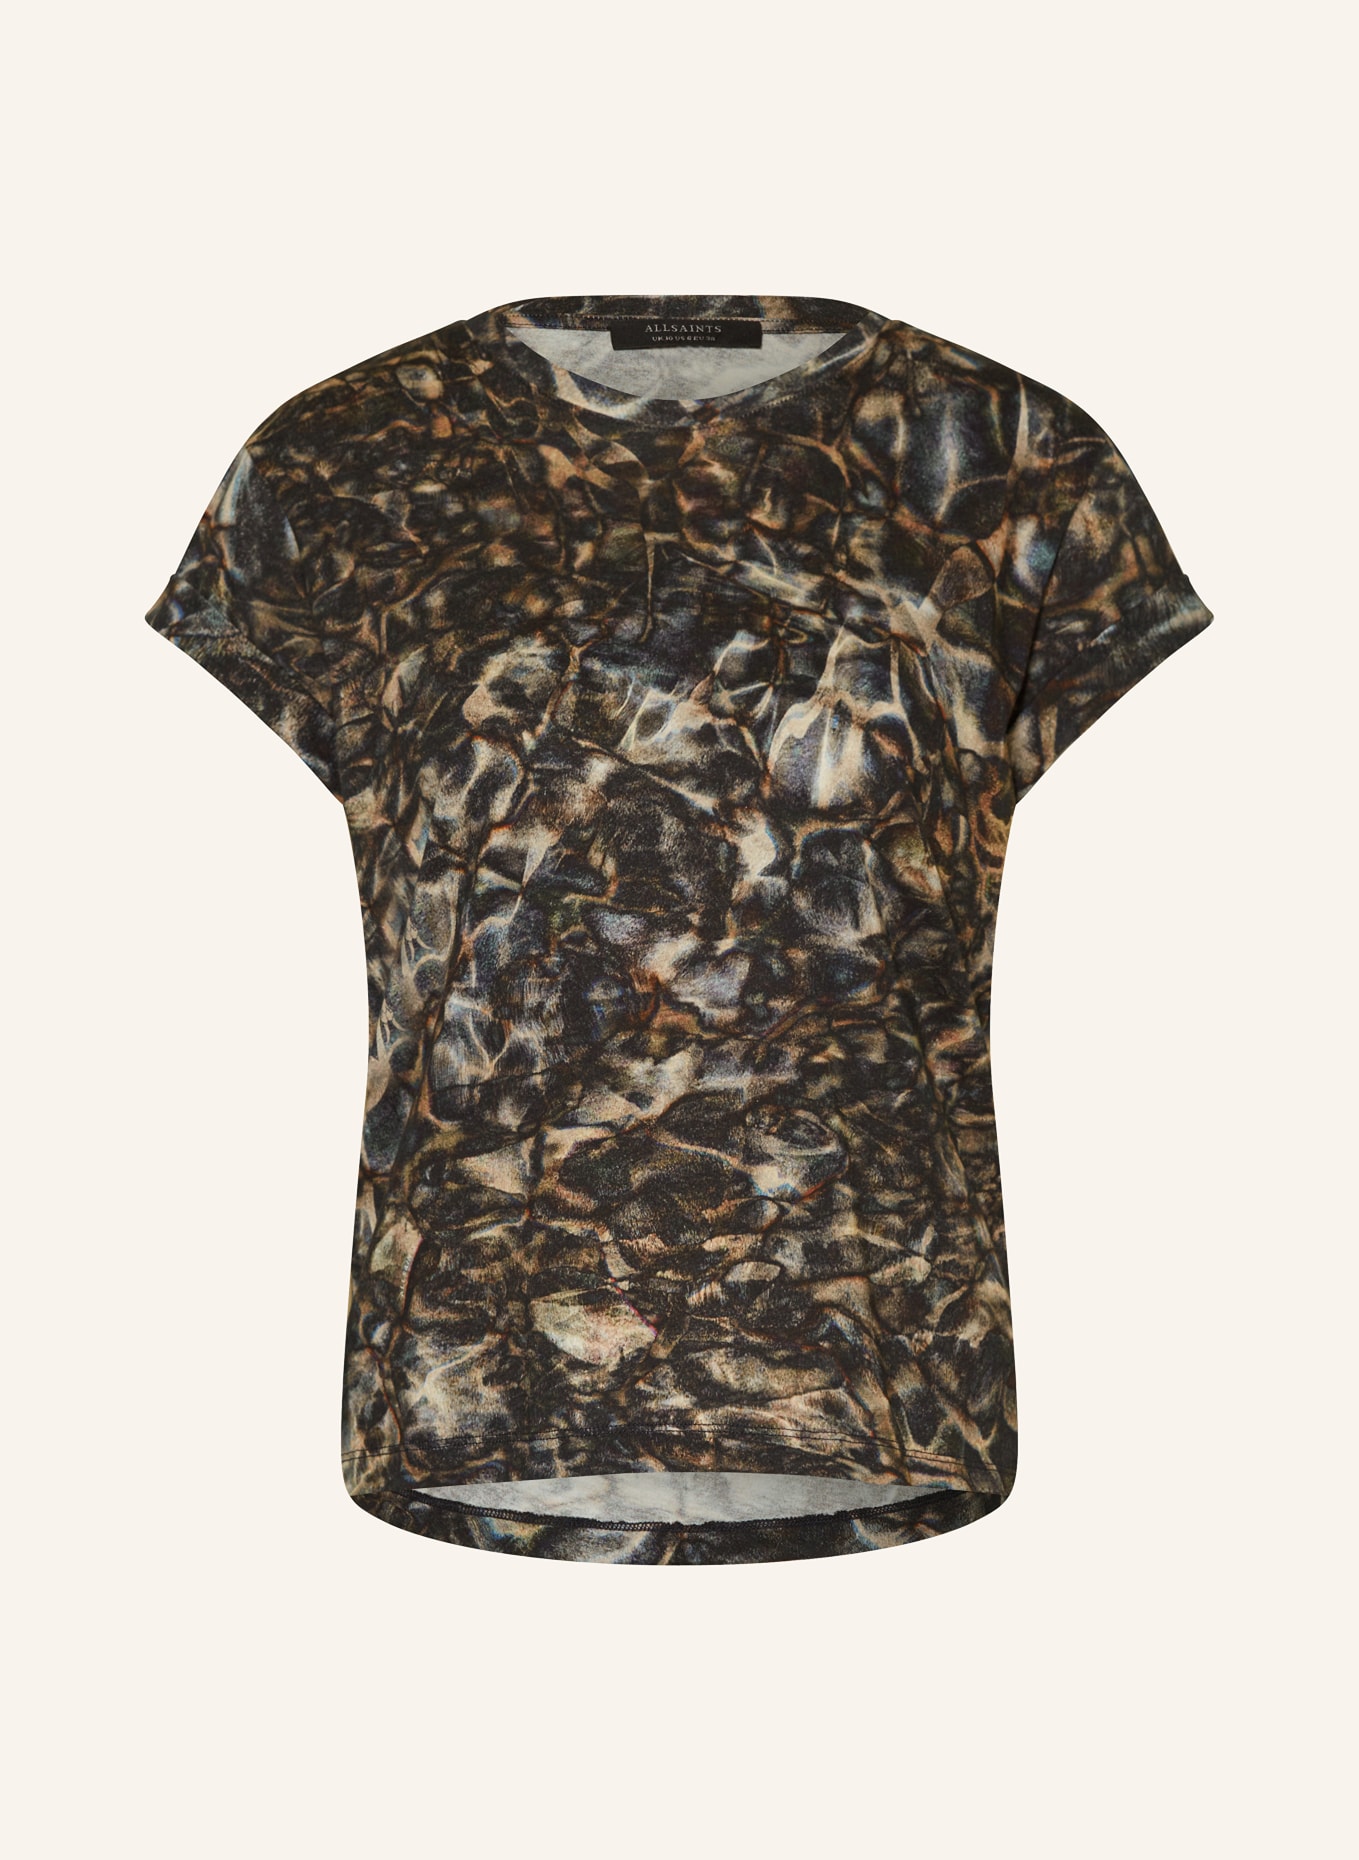 ALLSAINTS T-Shirt CALADESI ANNA, Farbe: DUNKELBLAU/ BRAUN/ CREME (Bild 1)